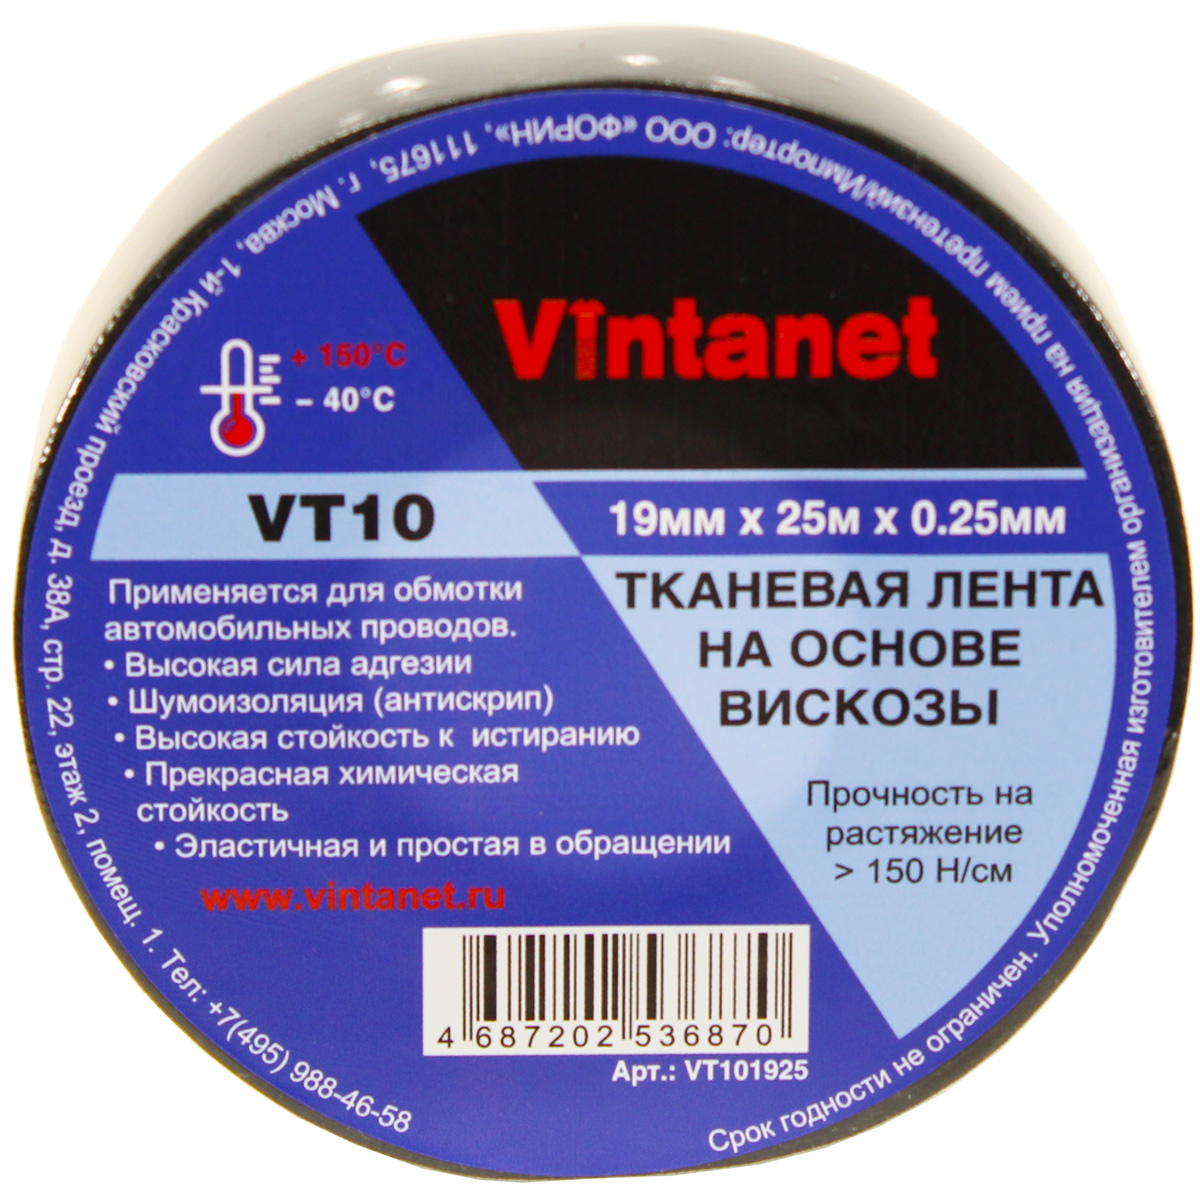 Тканевая лента на основе вискозы Vintanet VT10, 19мм х 25м, VT101925 салфетка из губчатой вискозы 3 шт